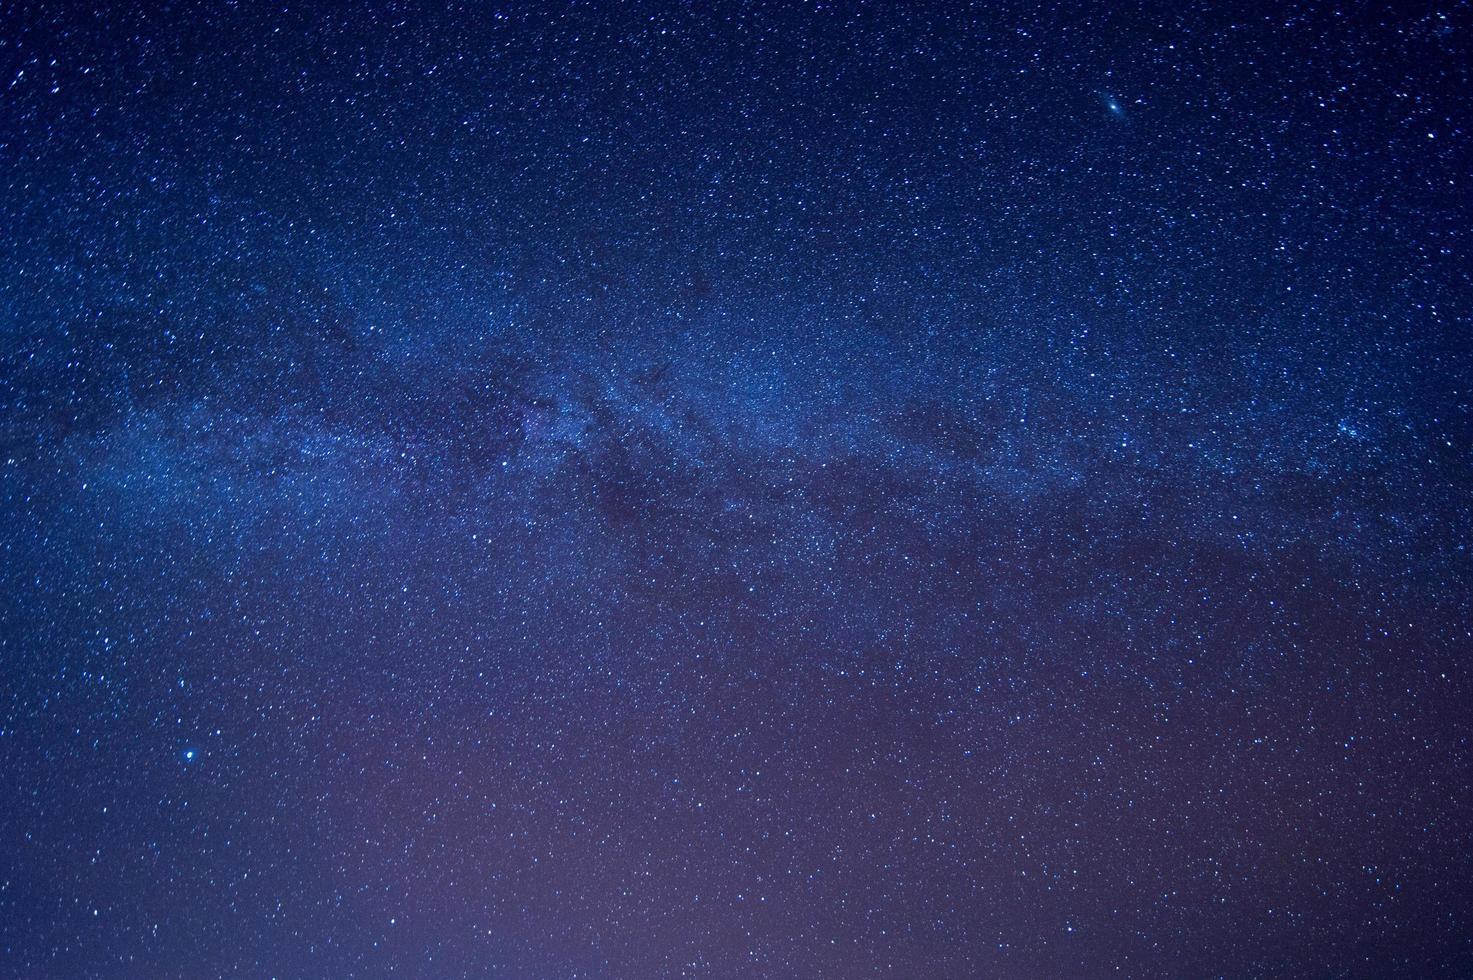 Milky Way Galaxy and Stars in Night Sky. photo